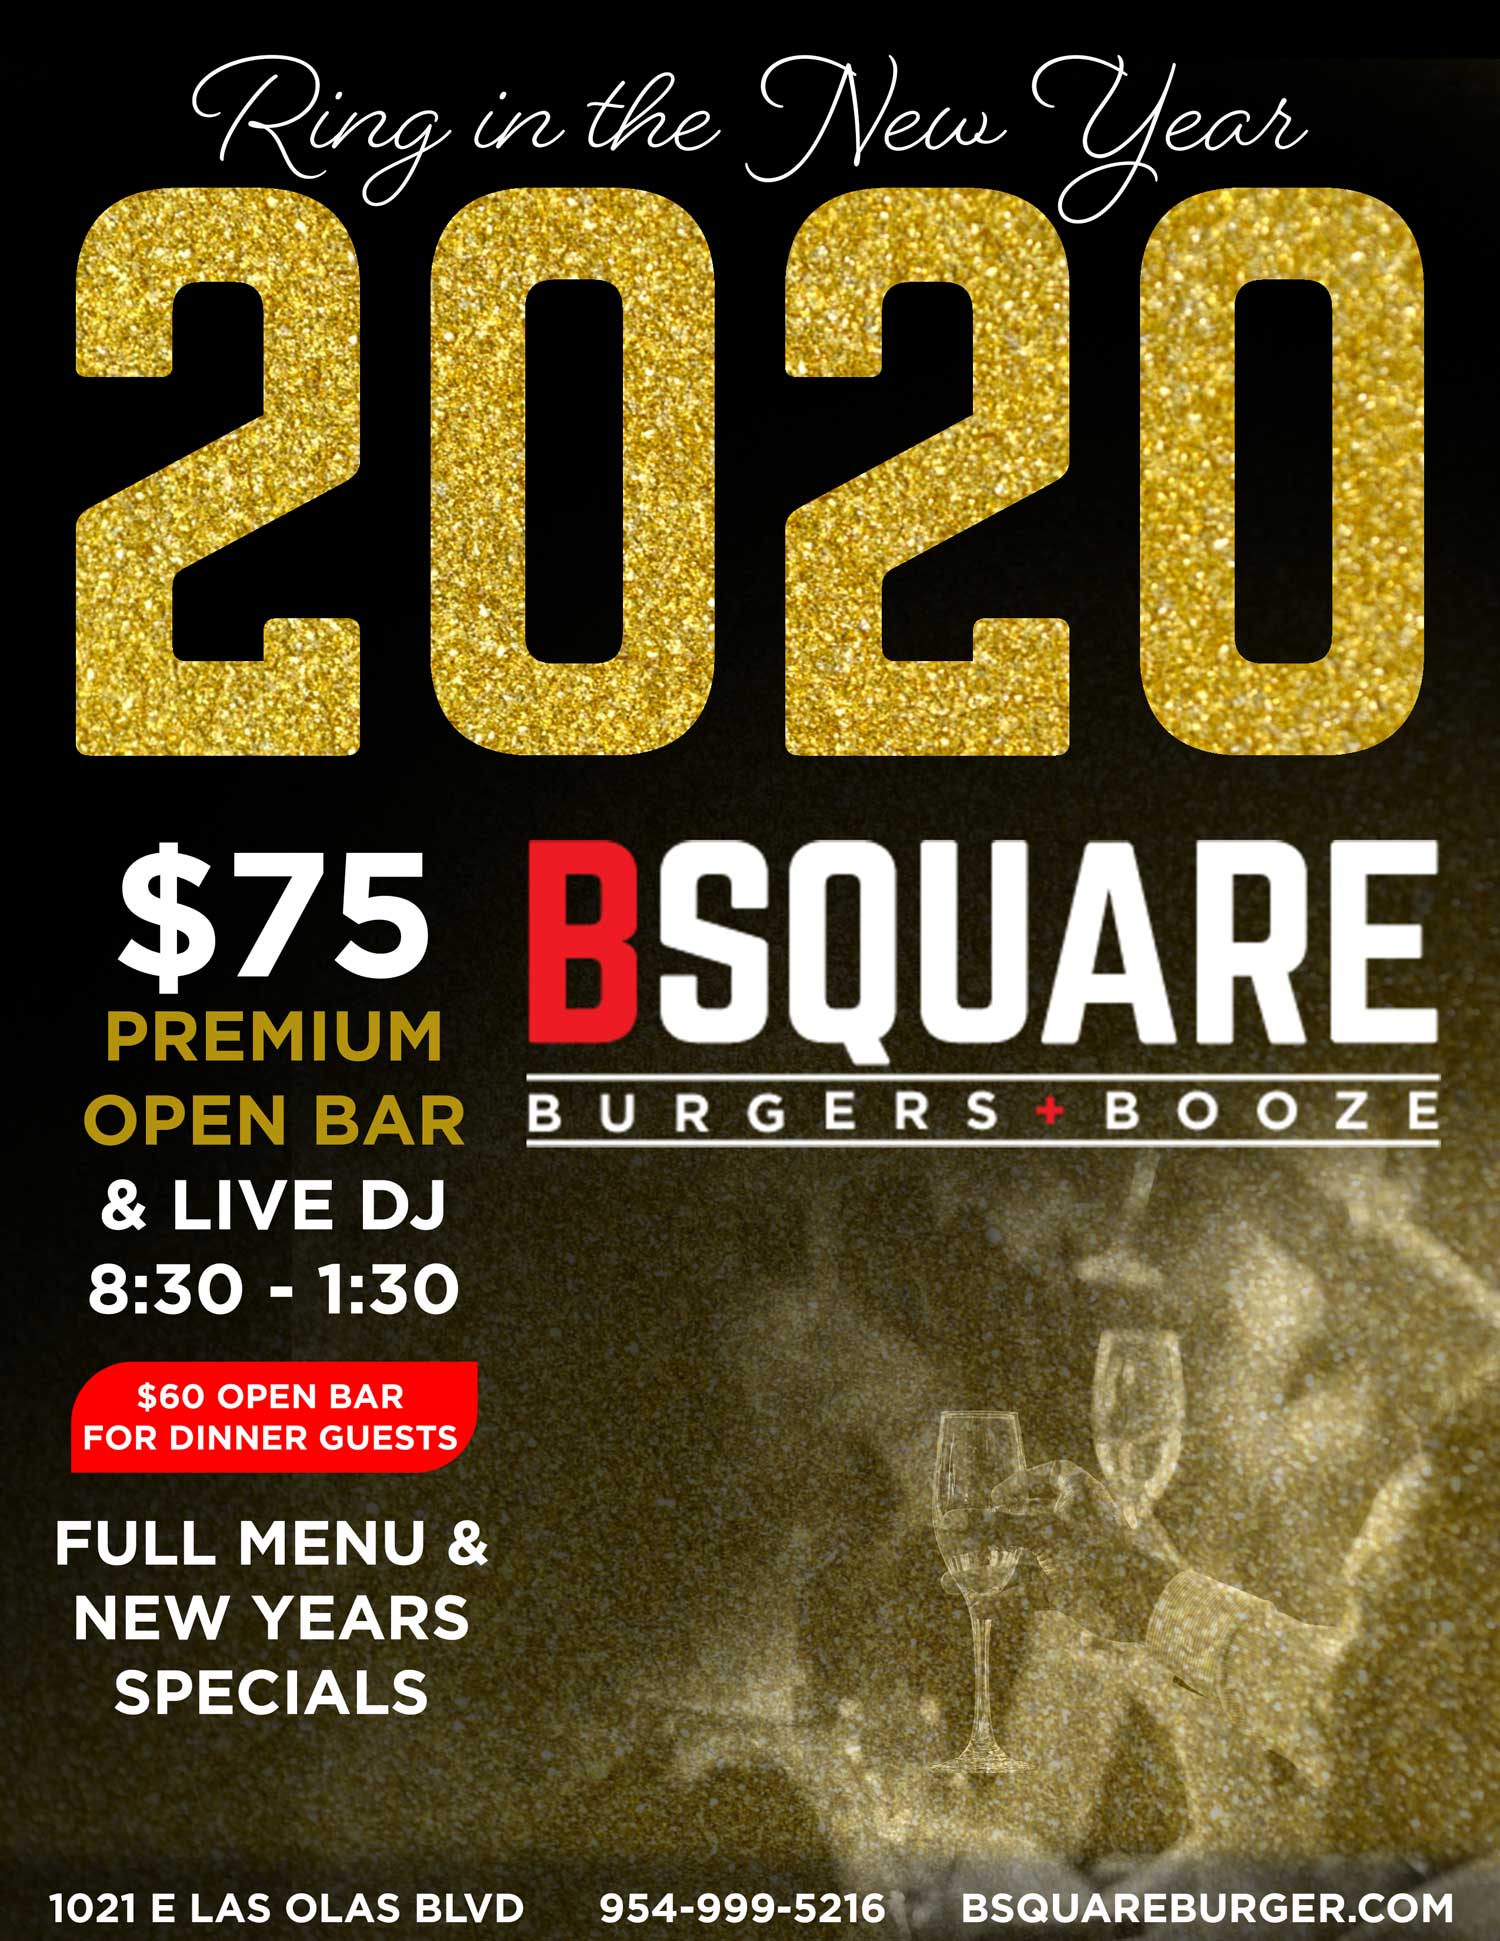 B Square Burgers & Booze | New Year Eve 2020 Celebration